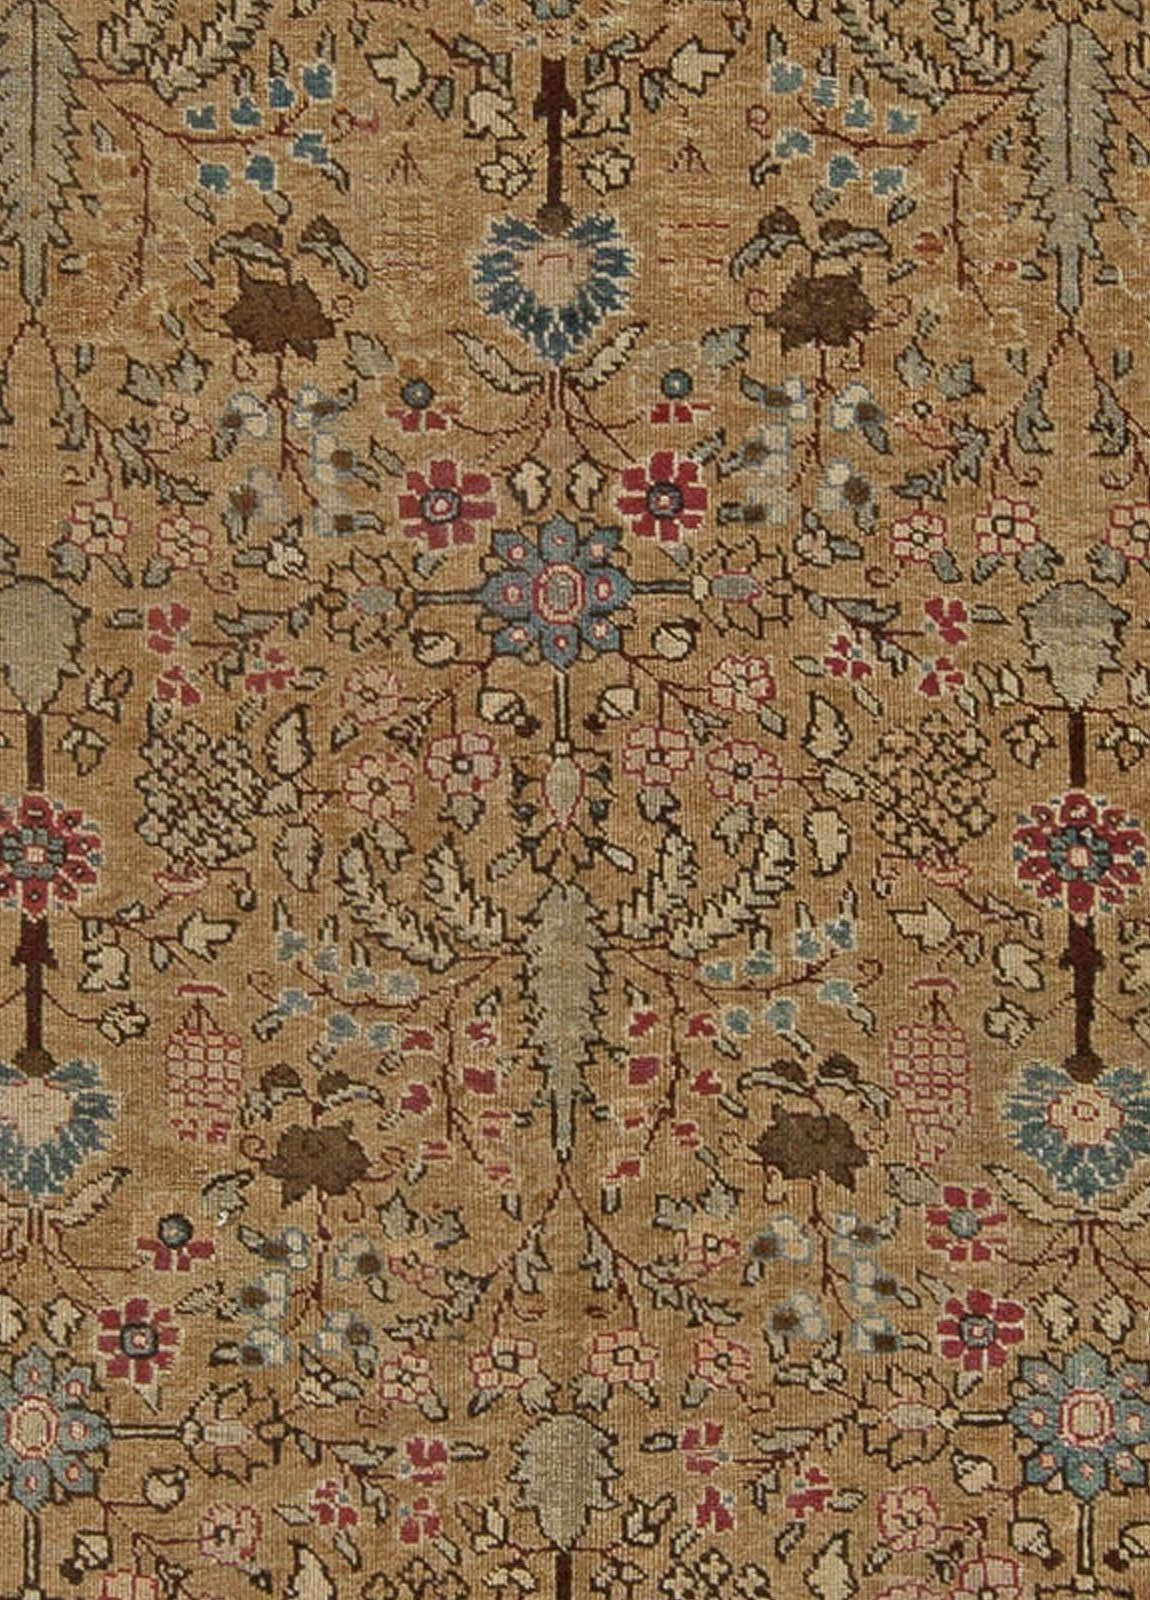 Antique Persian Tabriz rug.
Size: 9'2